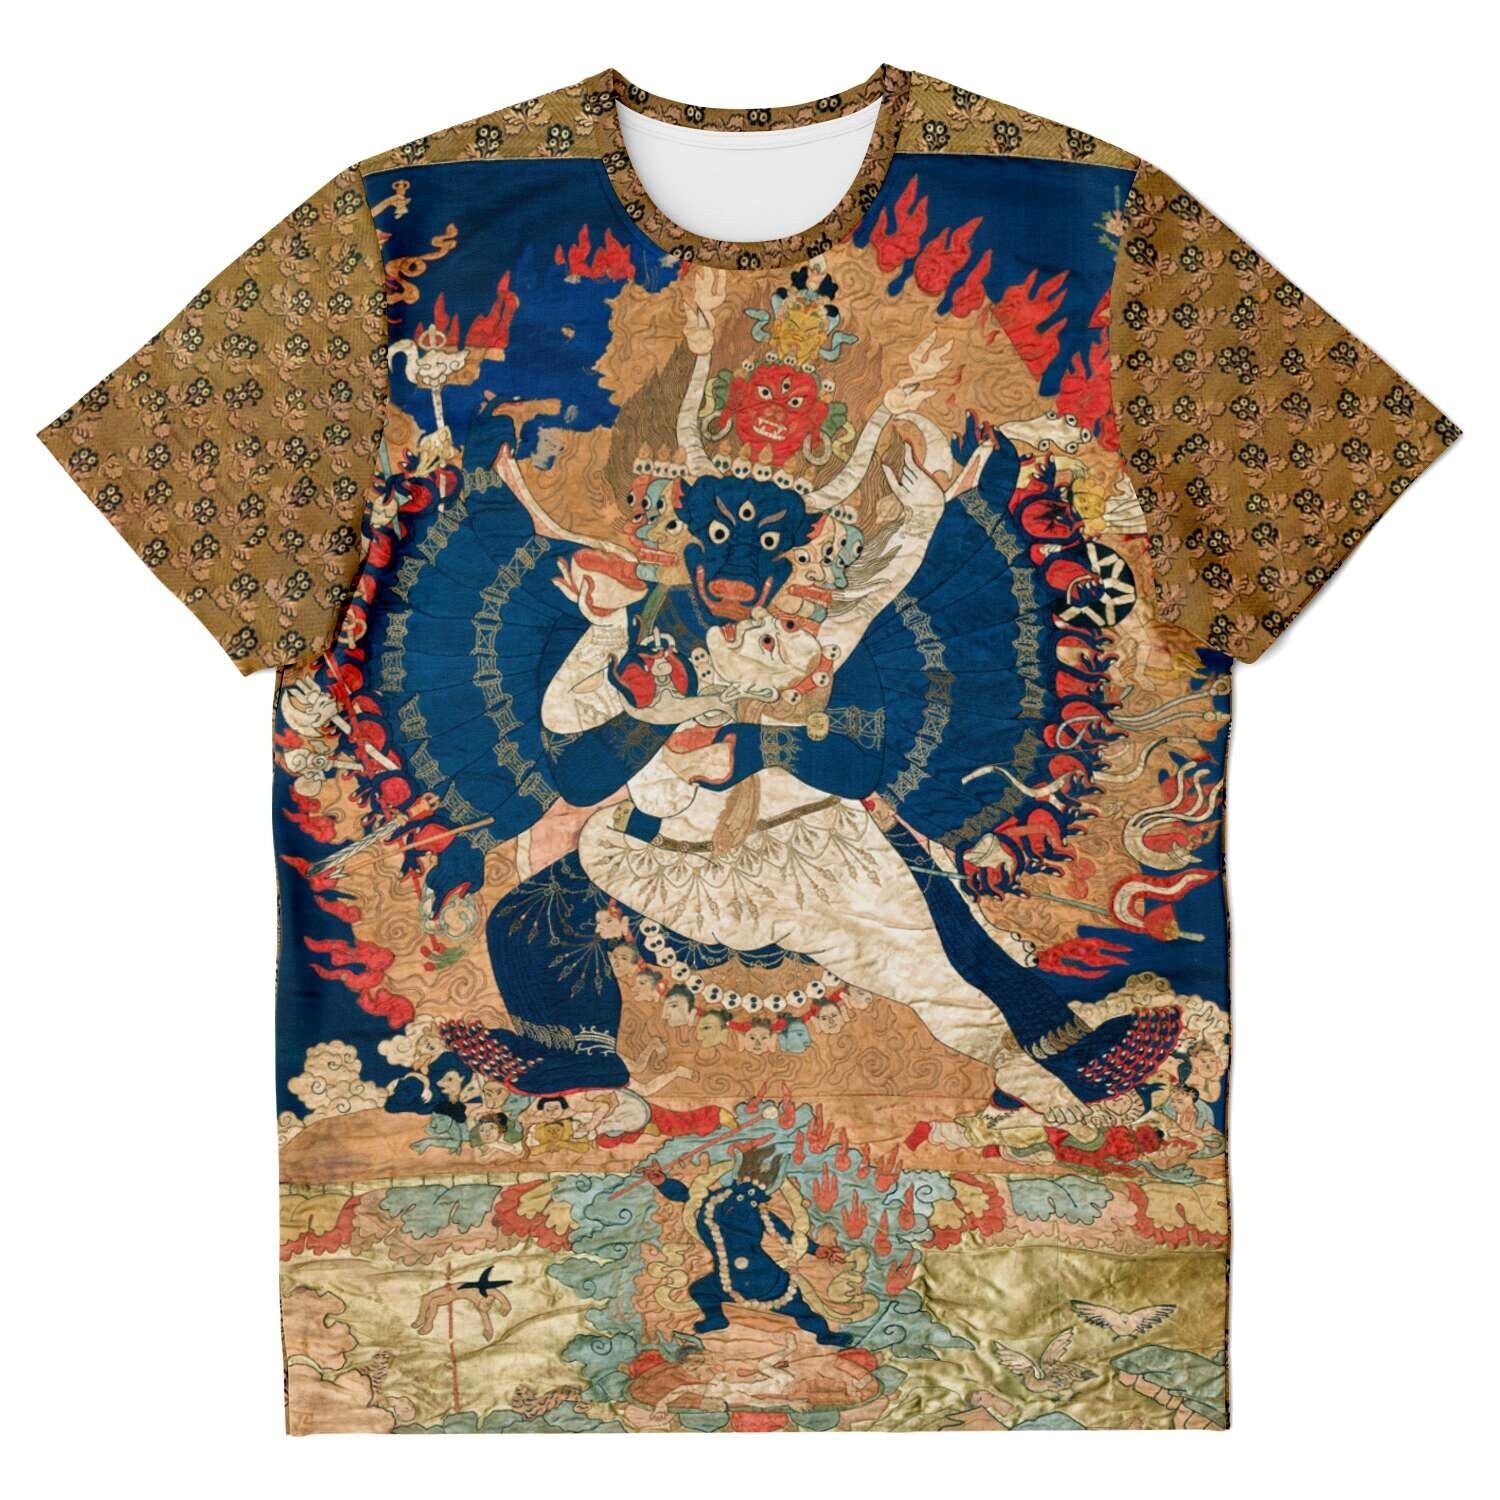 T-shirt Yama and Consort, Tibetan Thangka Buddhist Protector Deity | Tantra Bon Nepal Buddha Gift | Antique Vintage Graphic Art T-Shirt Tee